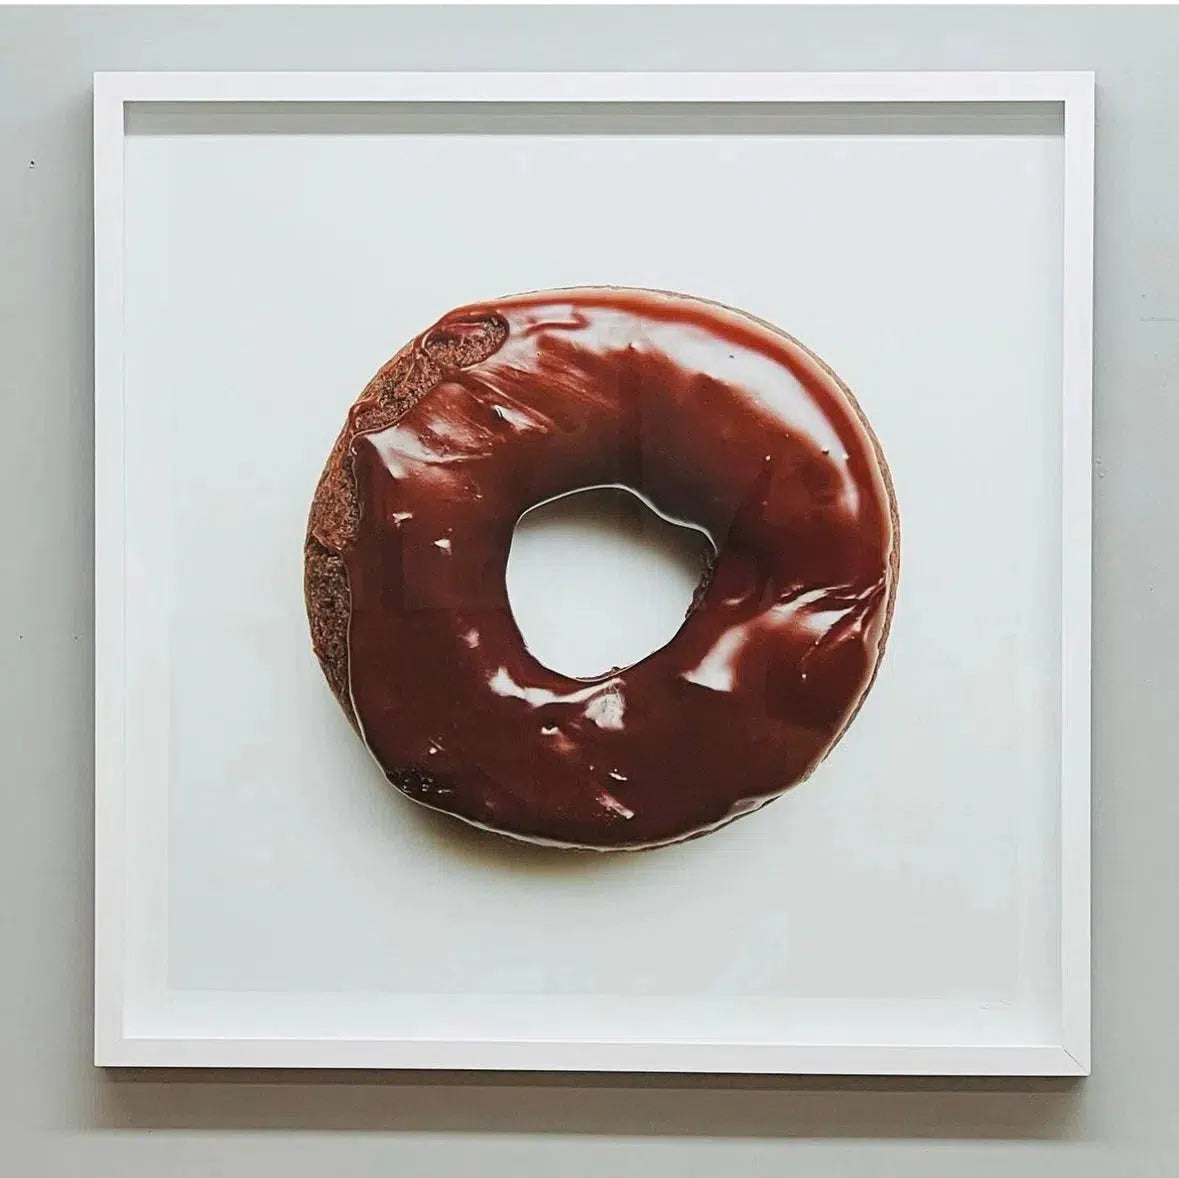 Chocolate Donut, by Peter Andrew-PurePhoto